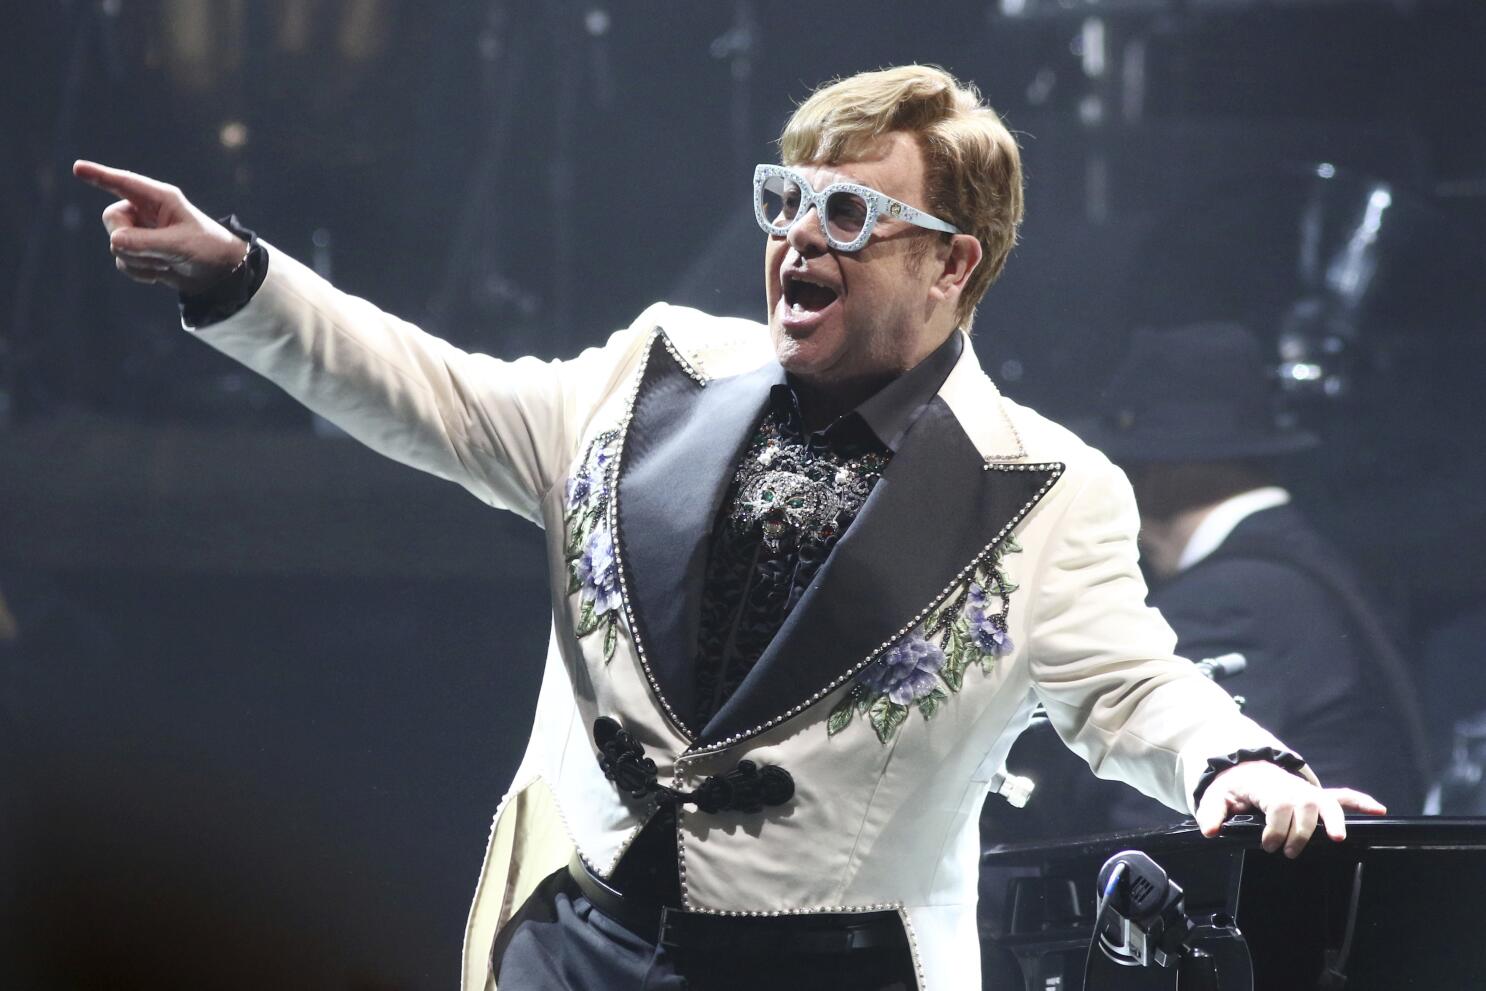 Elton John Presents: 'Beyond the Yellow Brick Road' on Roblox